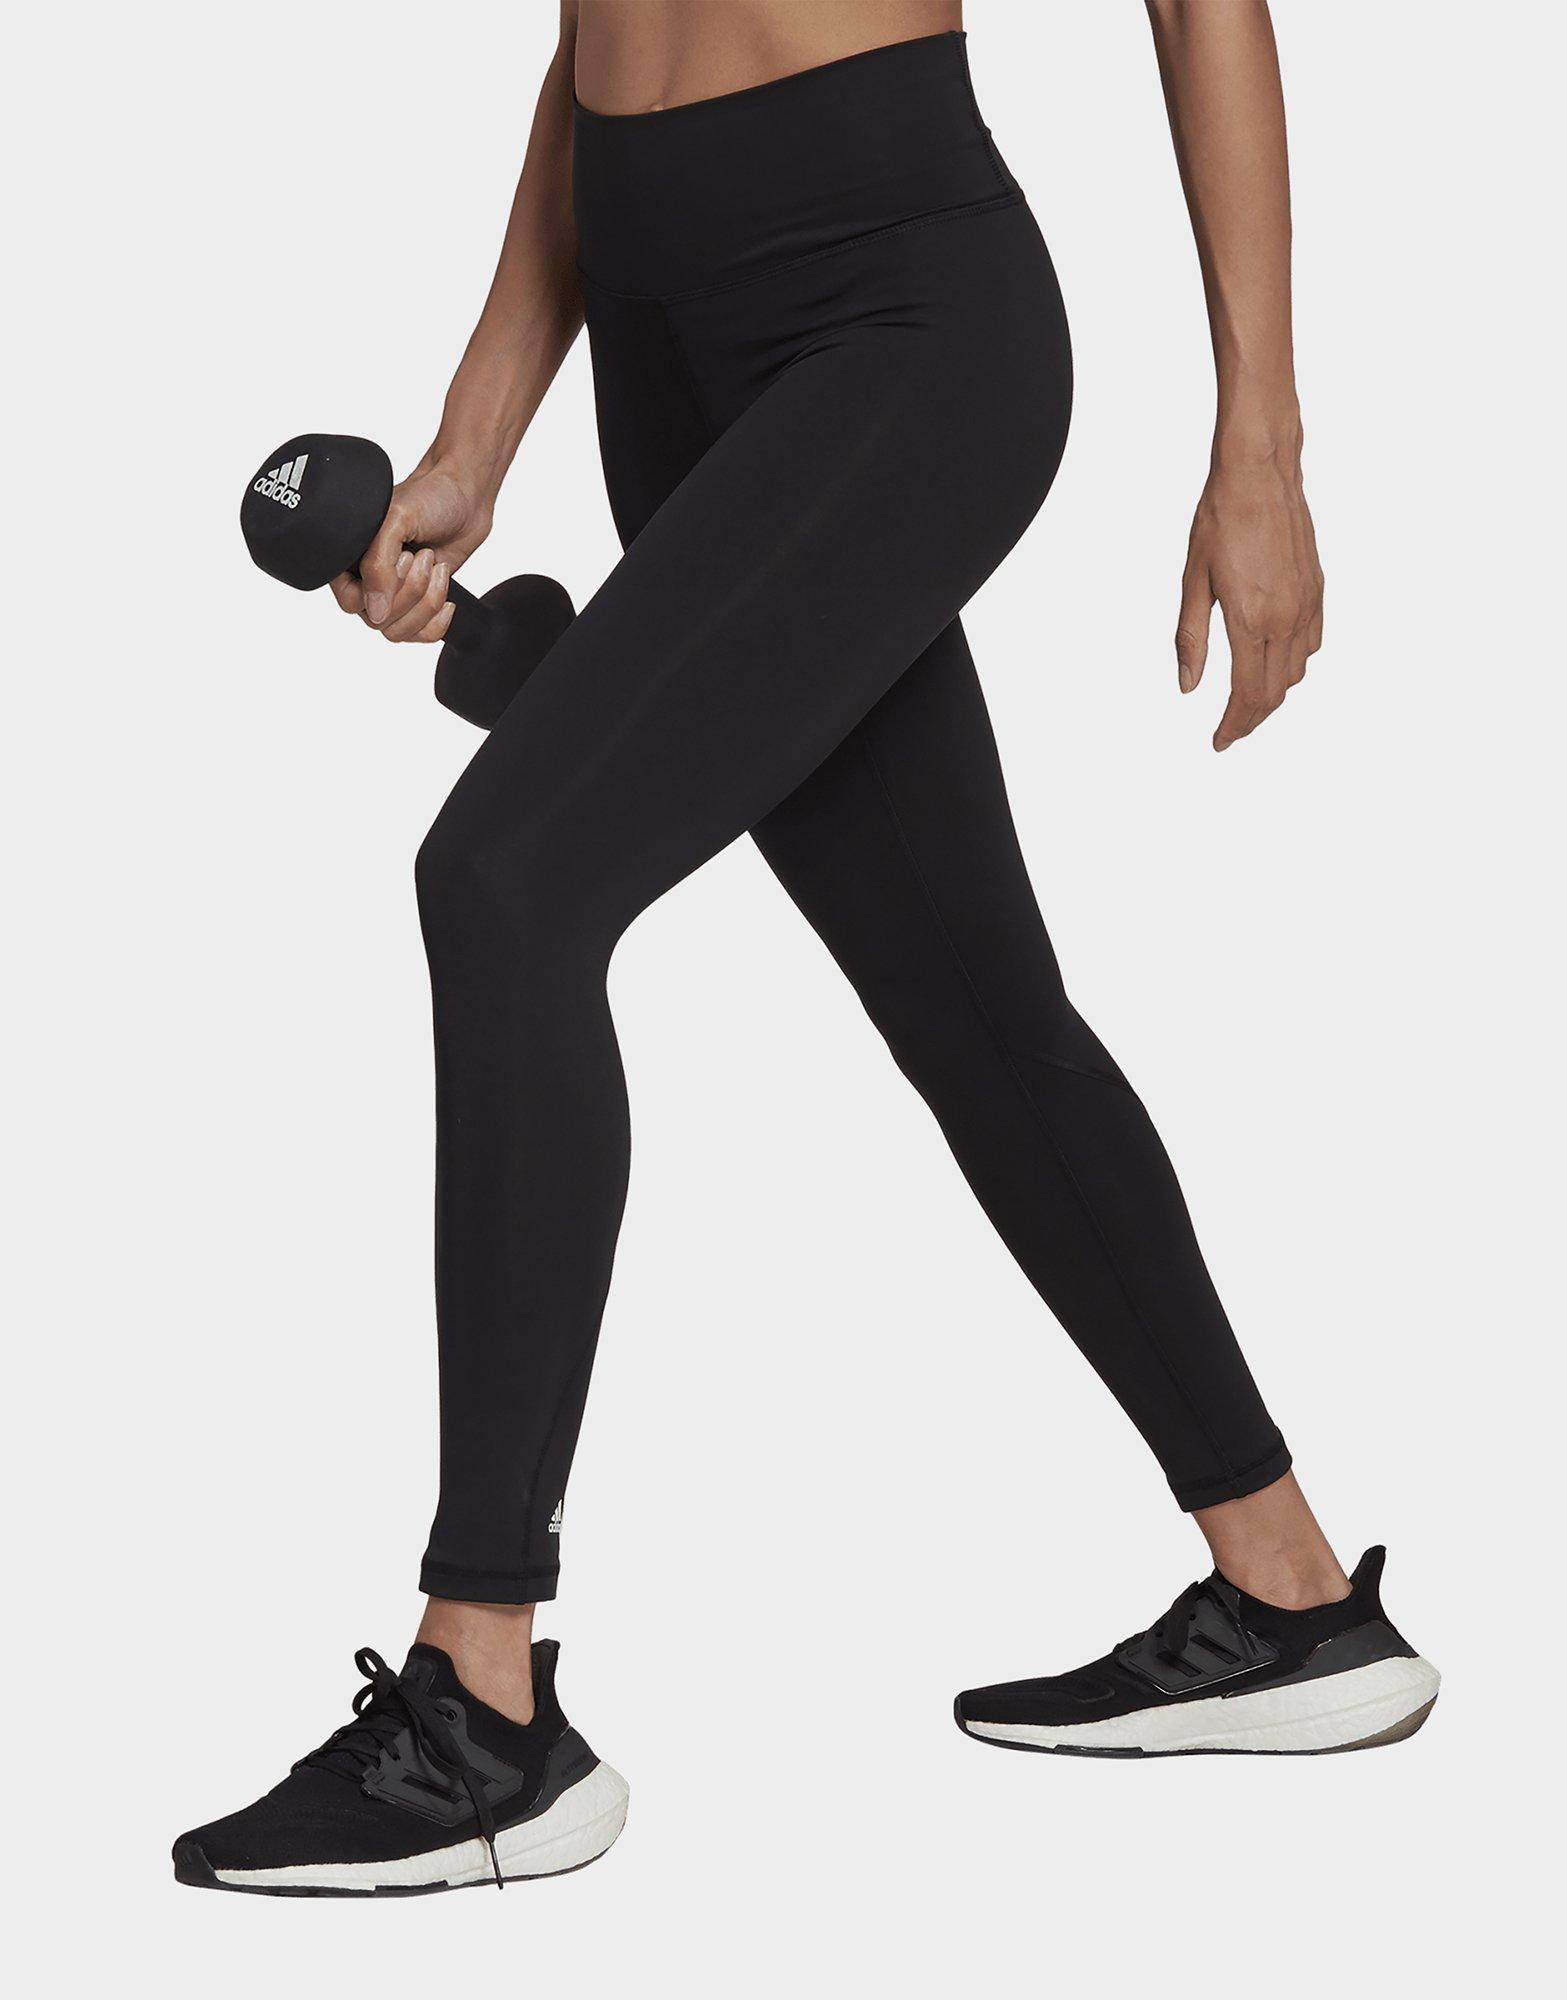 adidas Optime Training Leggings (Plus Size) - Black | adidas Canada